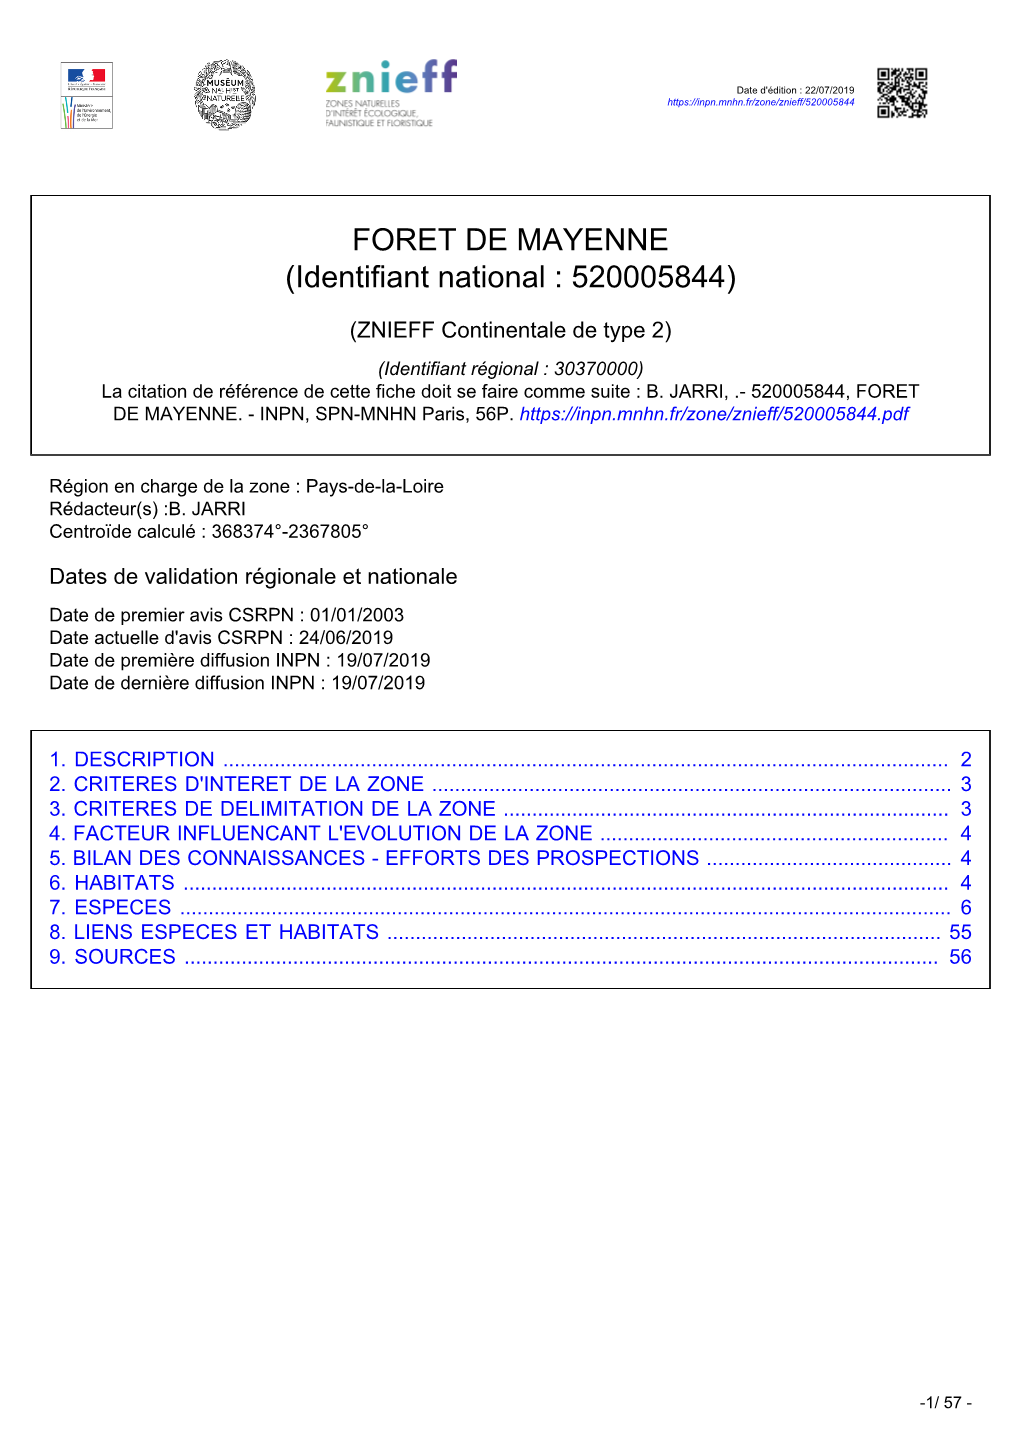 FORET DE MAYENNE (Identifiant National : 520005844)